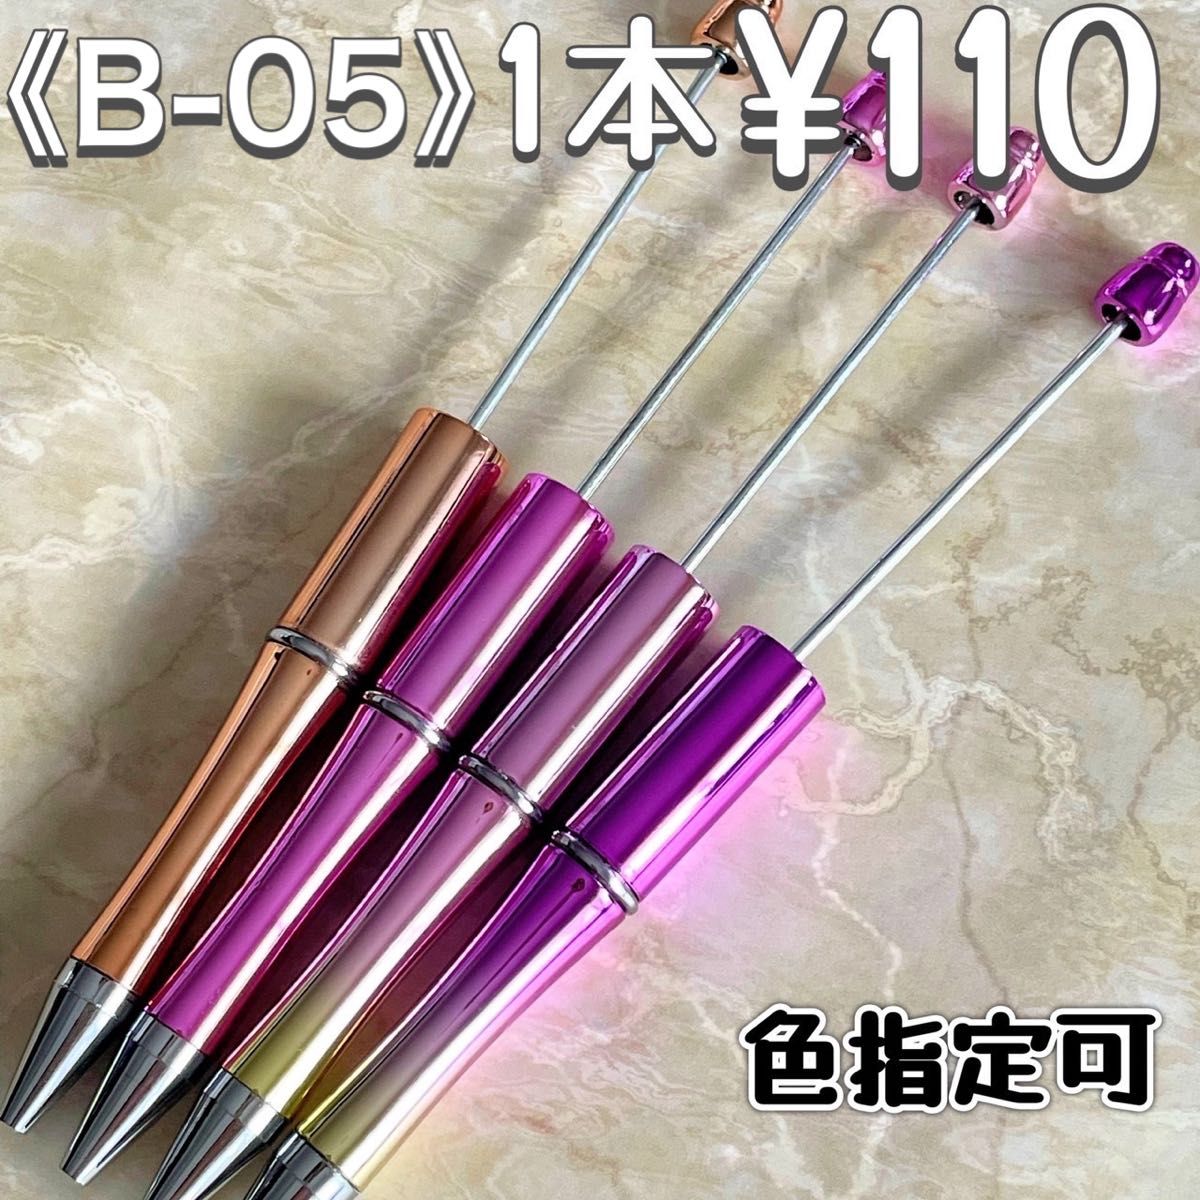 《B-05》カスタムボールペン メタル 4種類セット